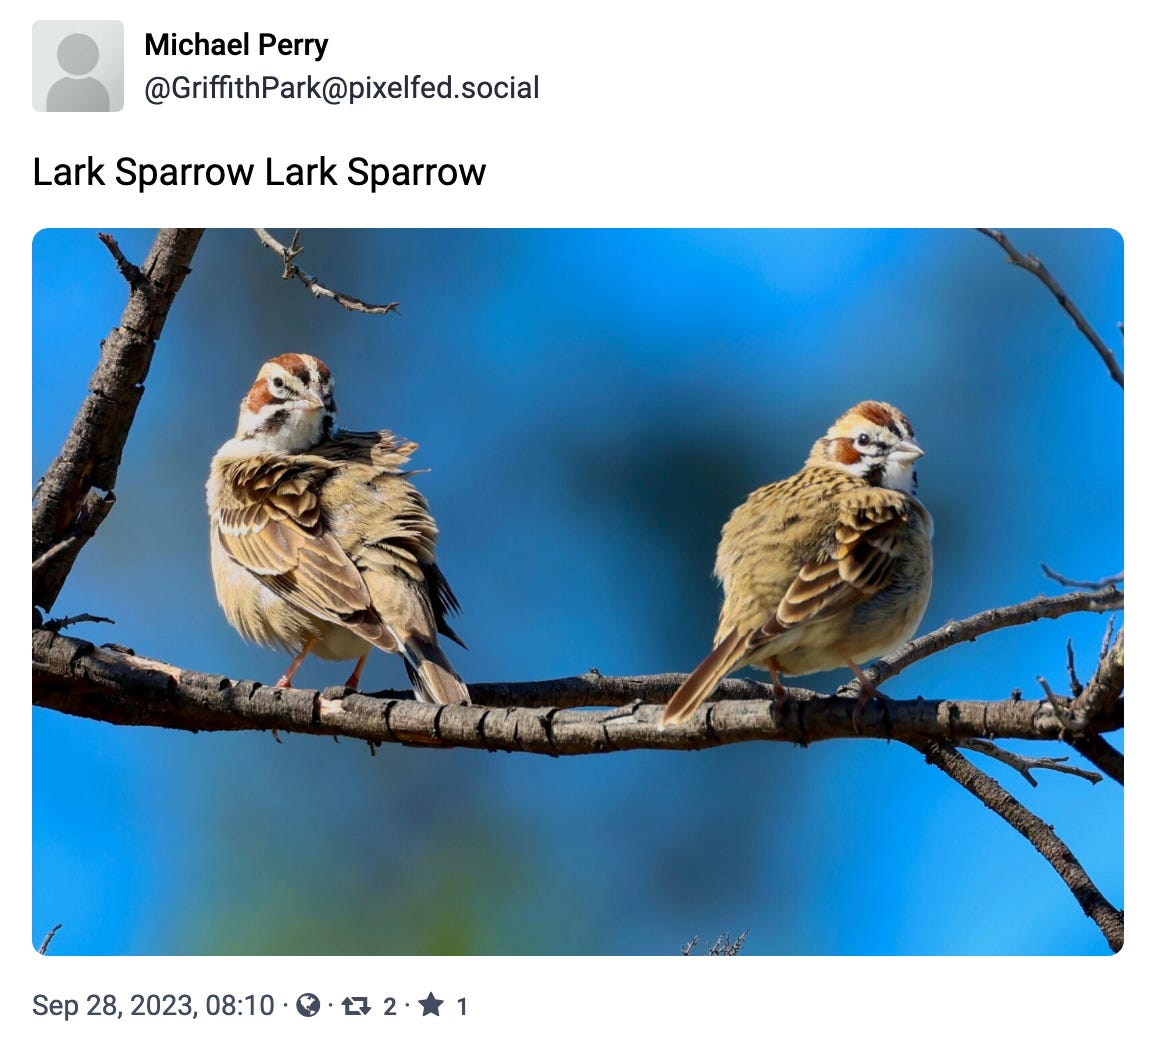 Lark Sparrow Lark Sparrow